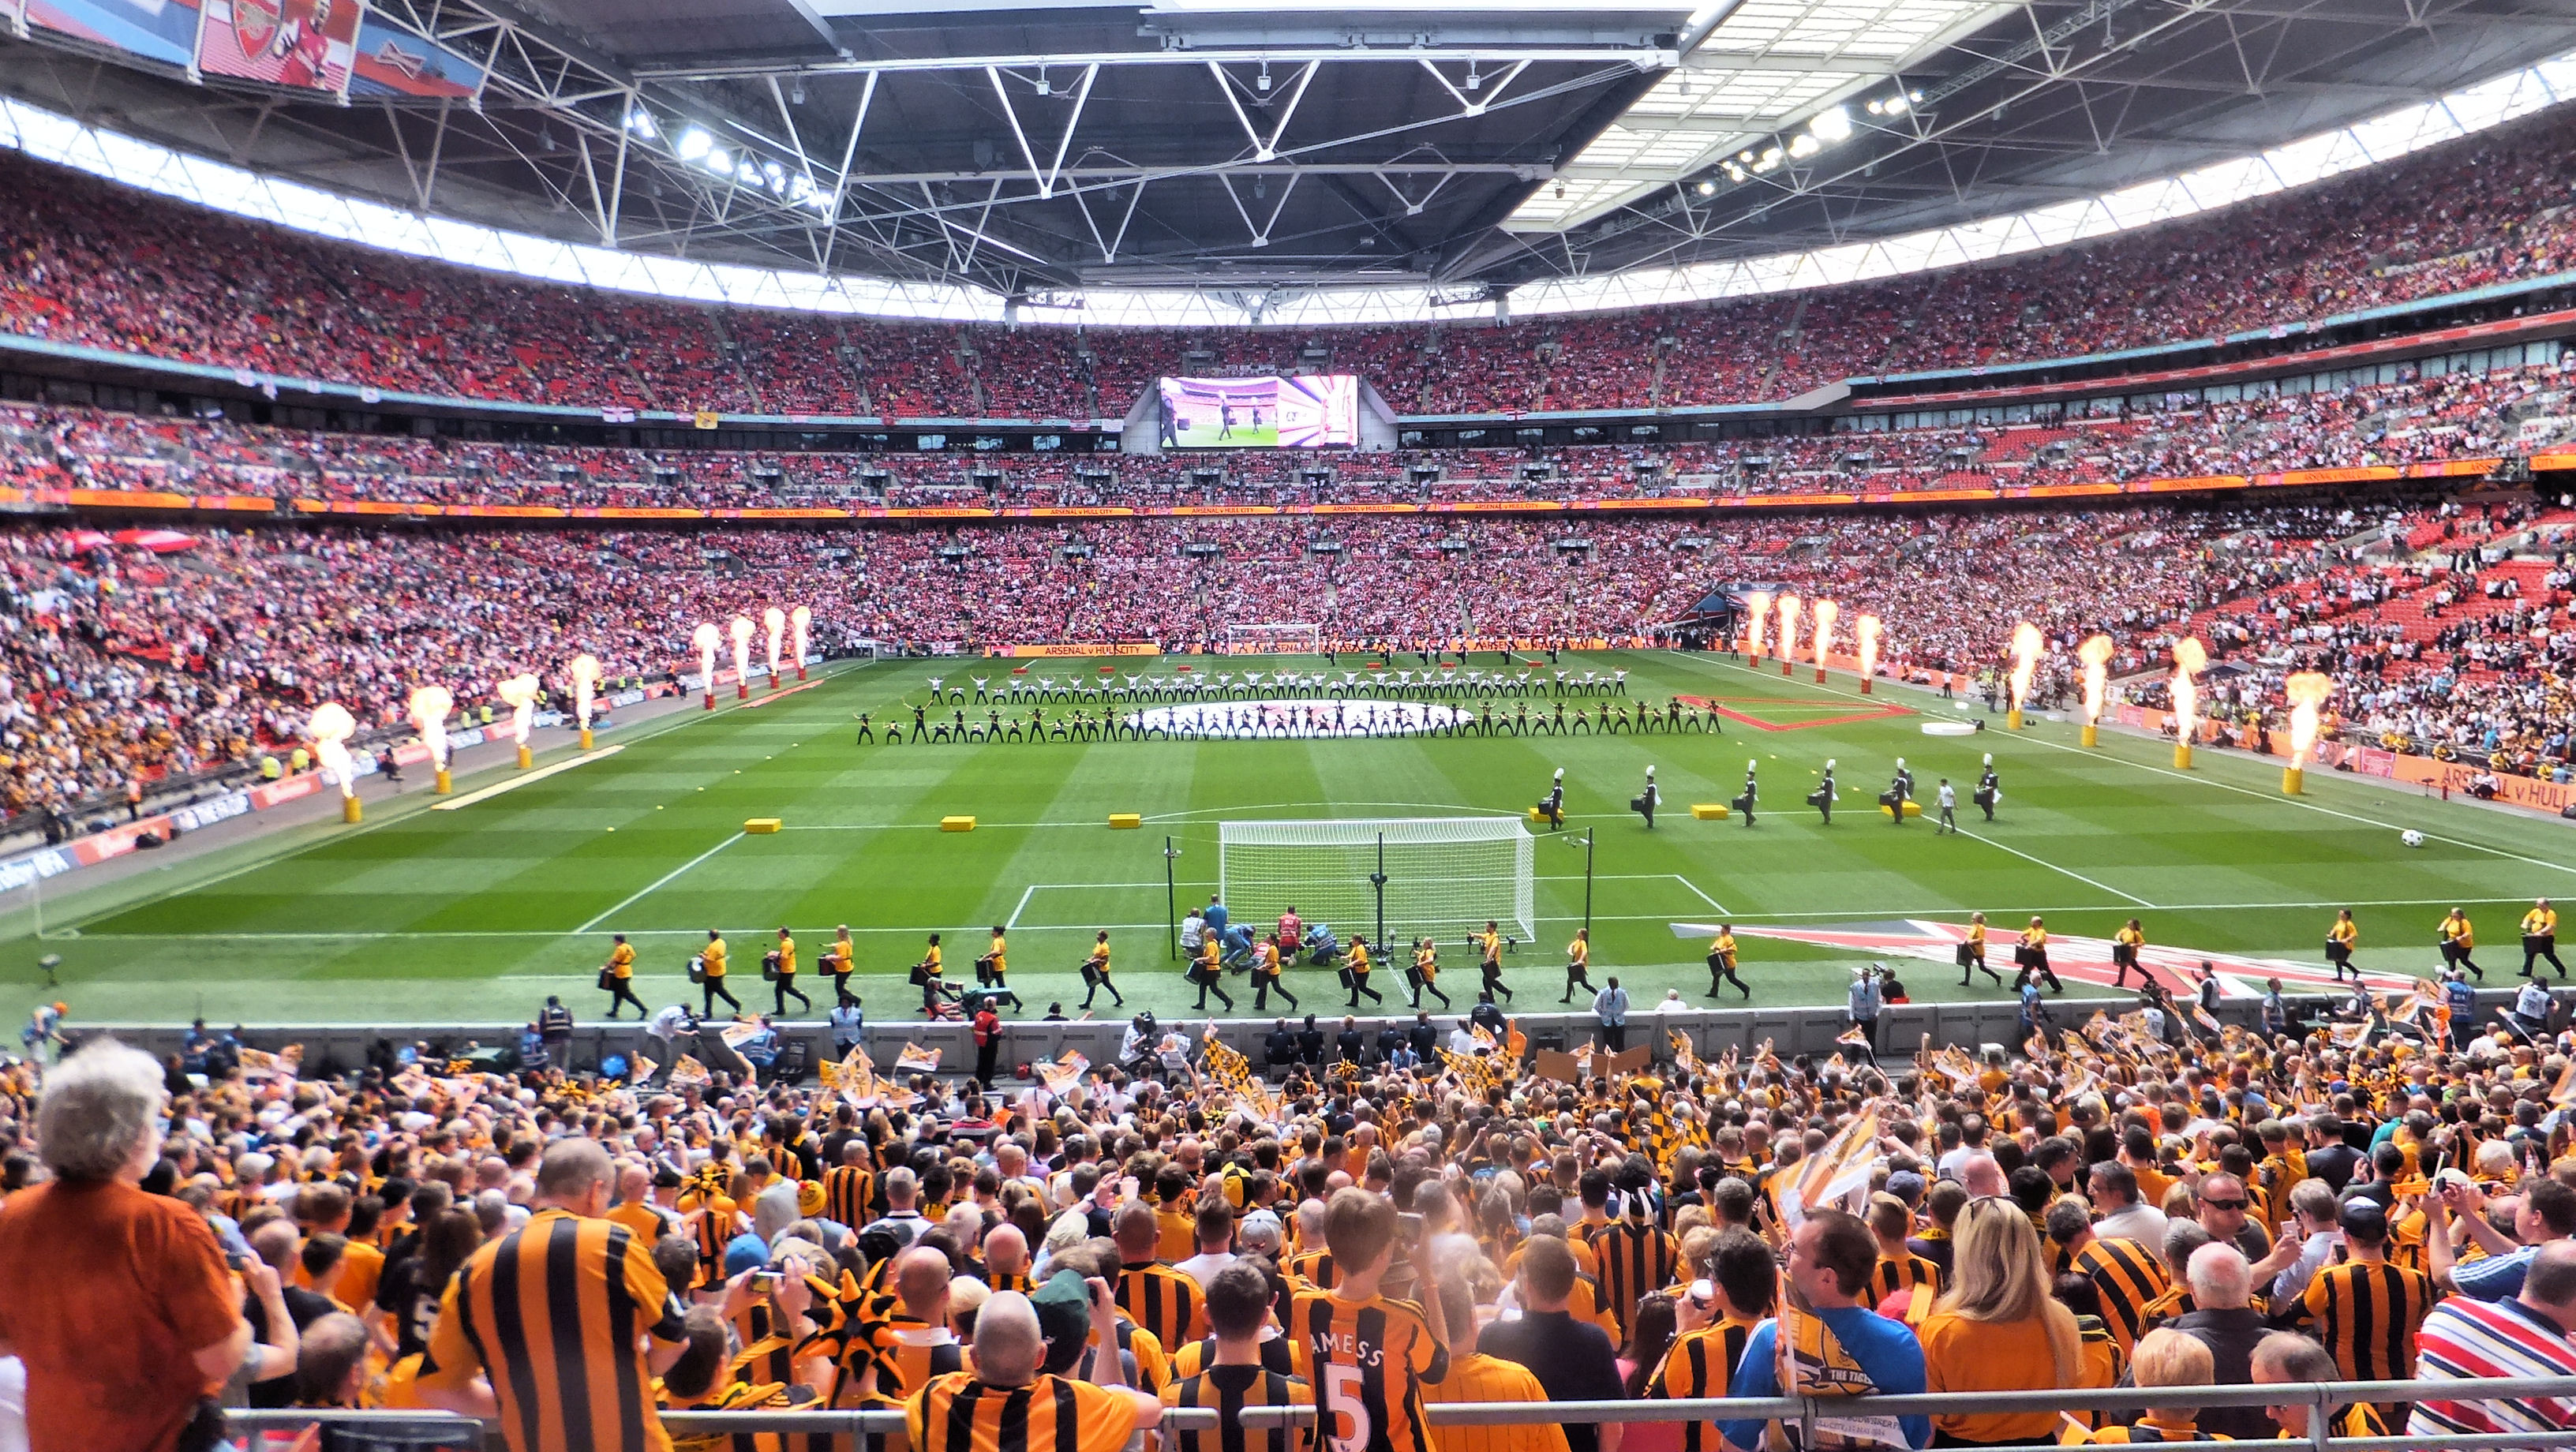 File:FA Cup Final 2014 Wembley stadium.jpg - Wikimedia Commons